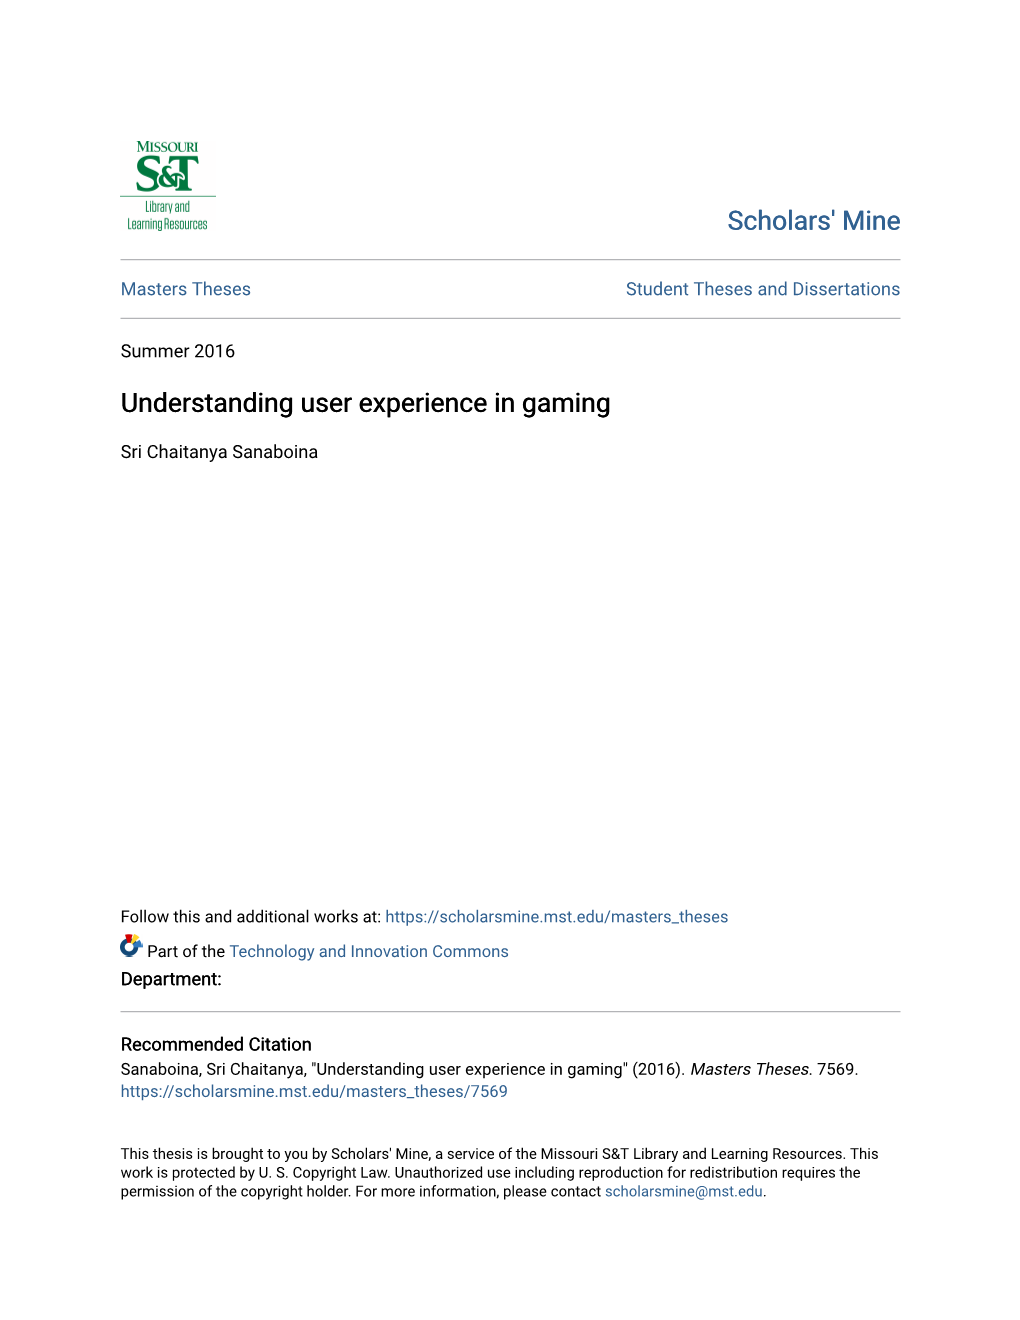 Understanding User Experience in Gaming